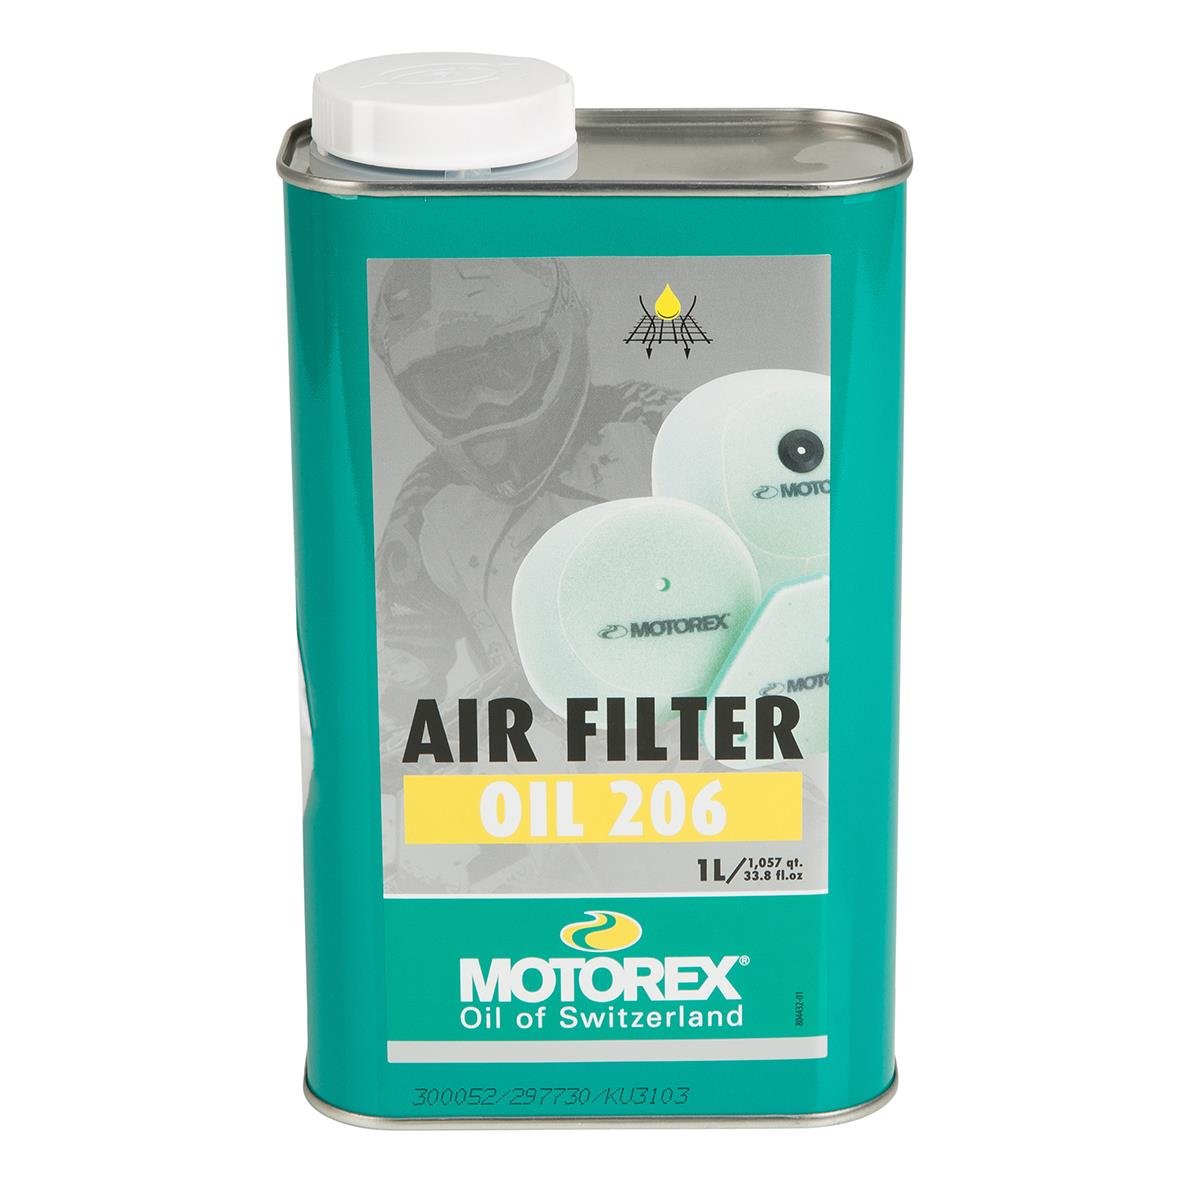 https://www.maciag-offroad.de/shop/artikelbilder/normal/139105/motorex-luftfilteroel-air-filter-oil-206-1.jpg